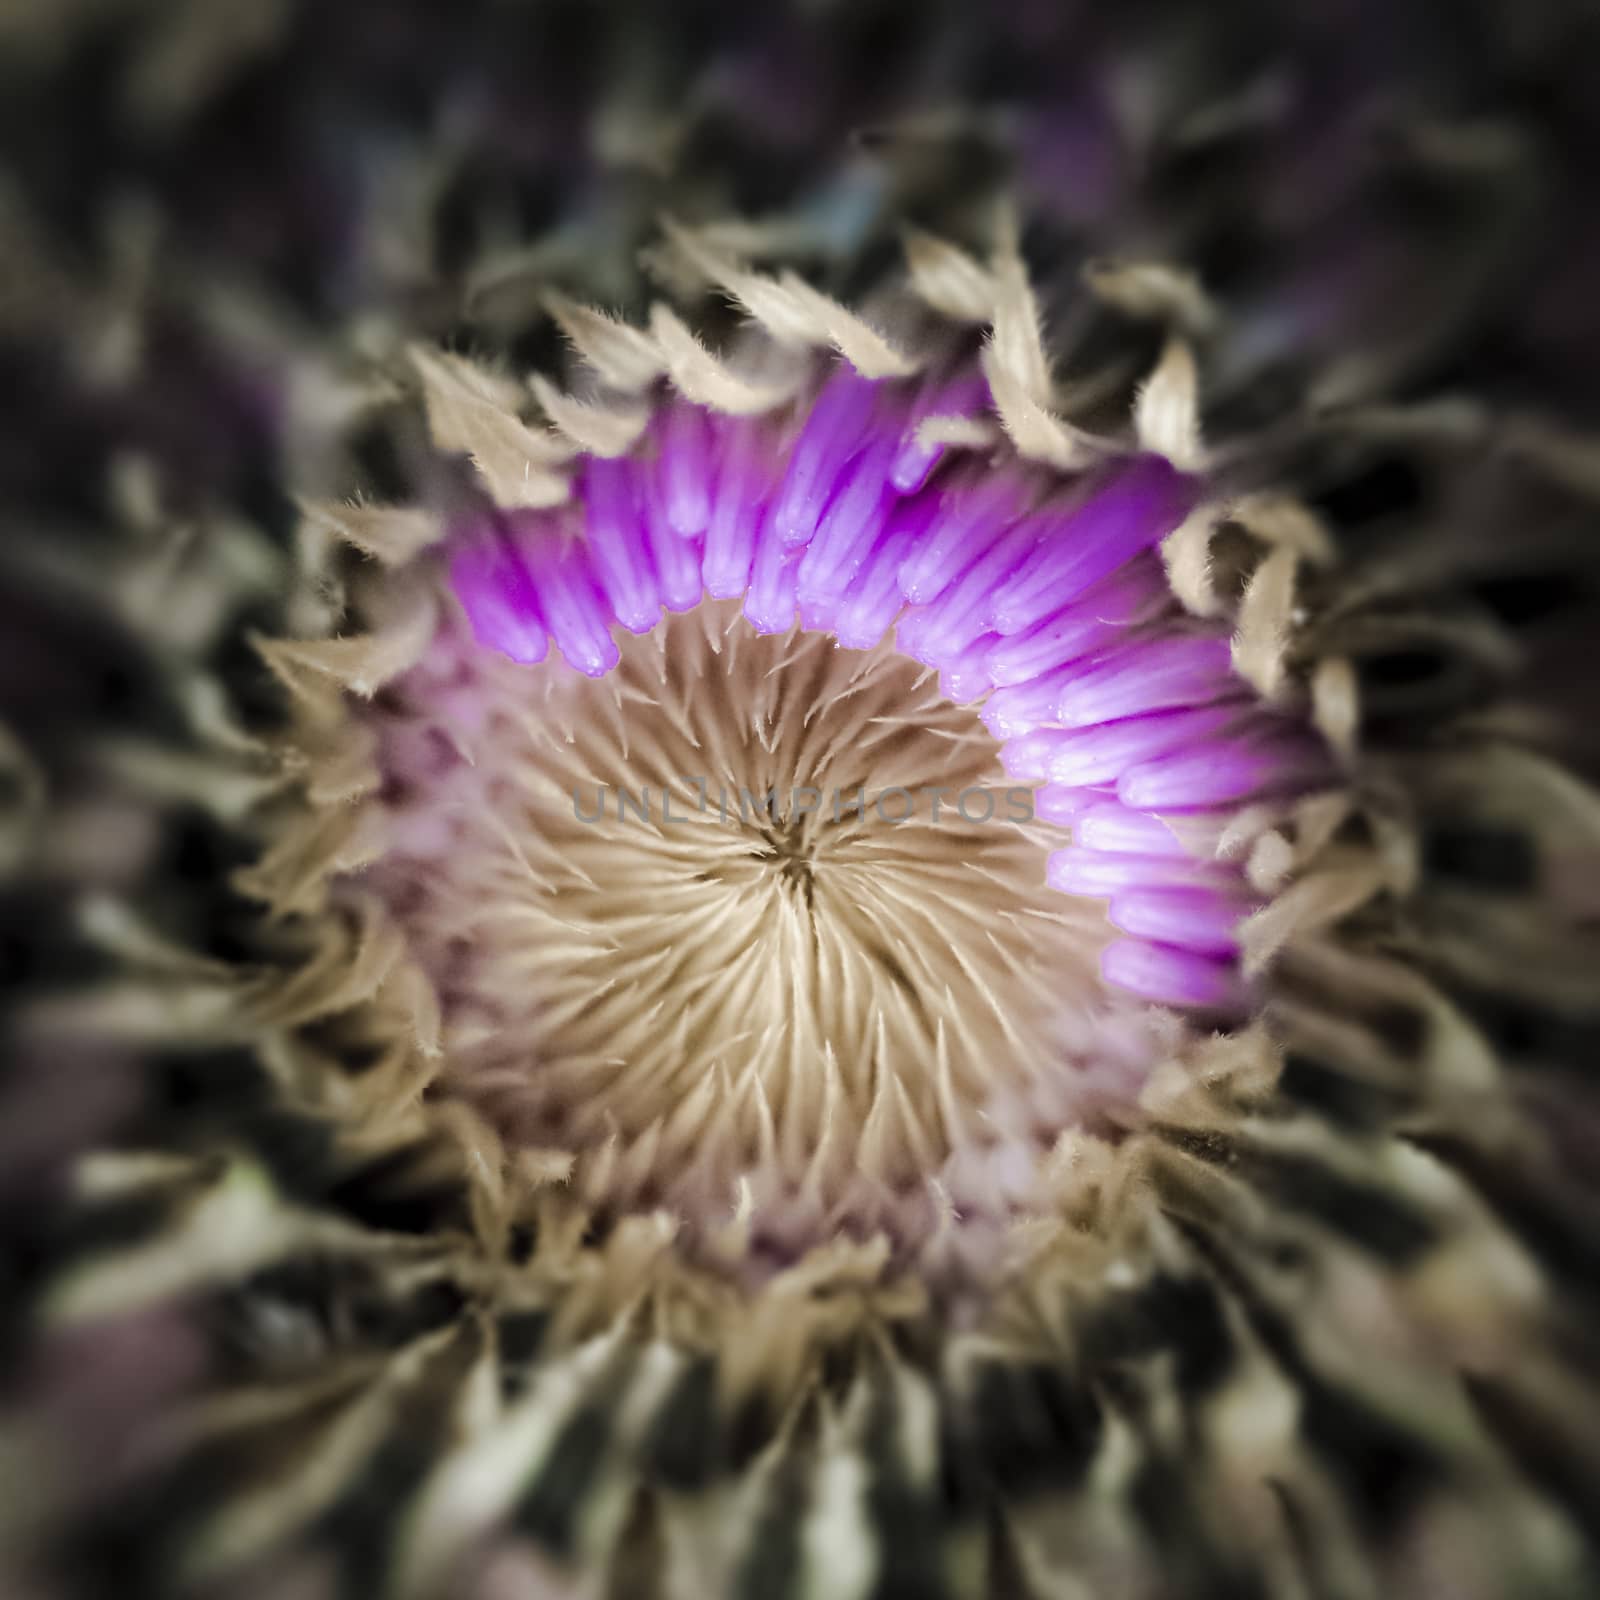 Macro photograph of a flower